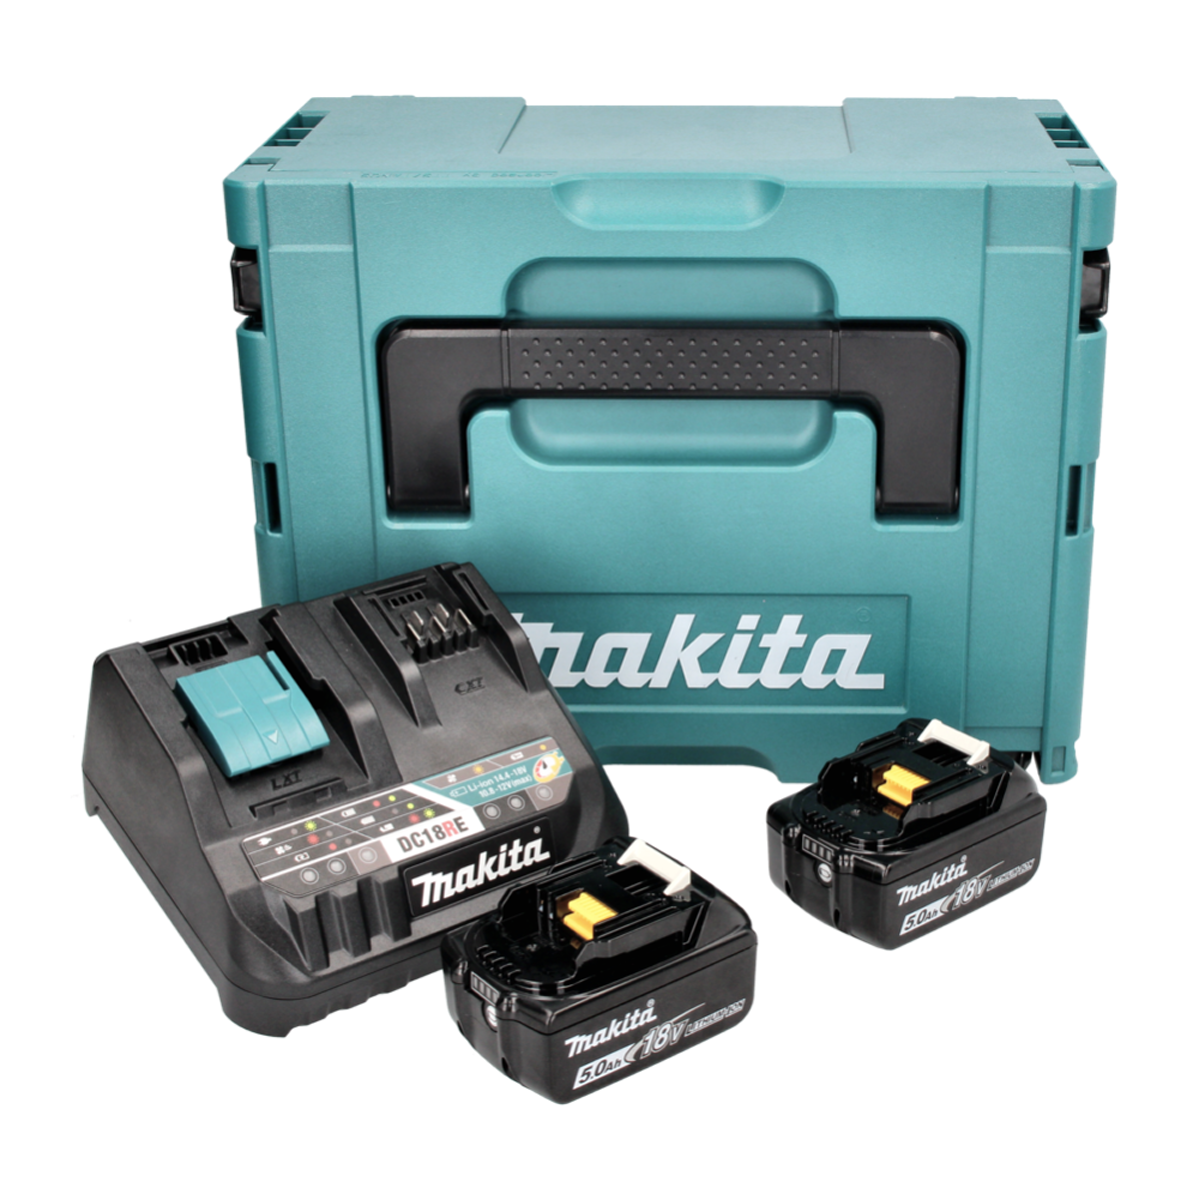 Lithium-Ionen MAKITA Kit, Volt Power 18 Source Power